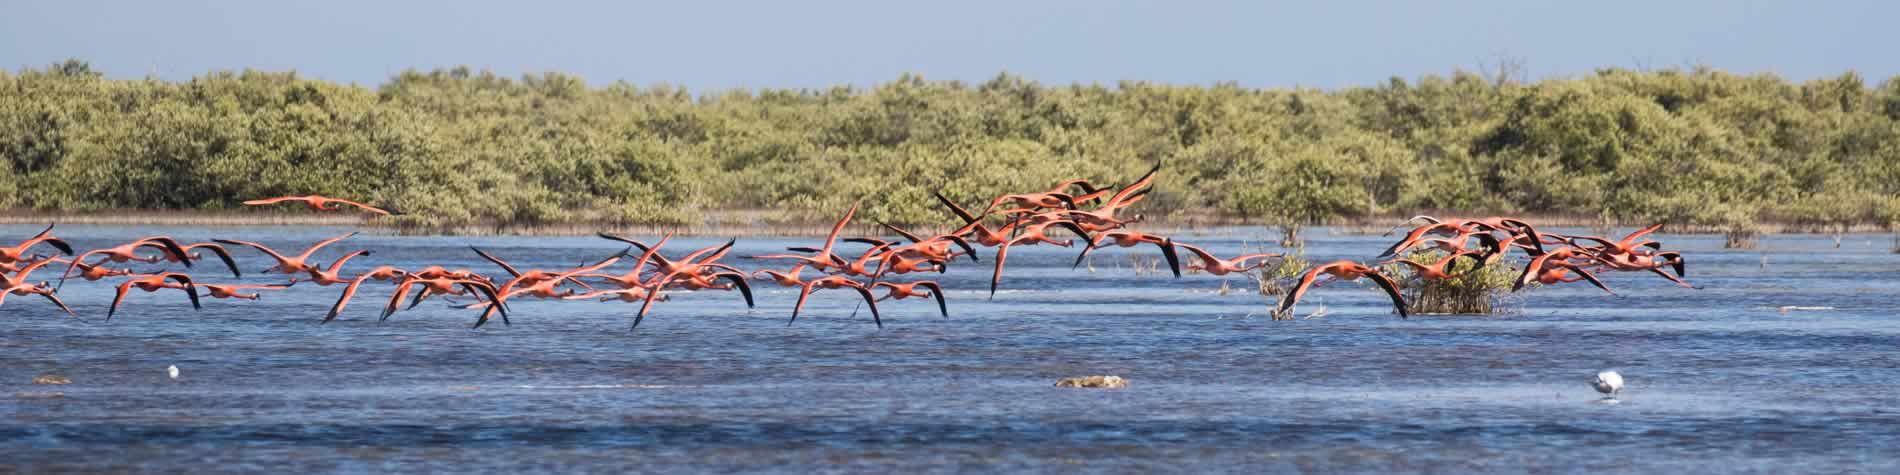 Flying flamingos